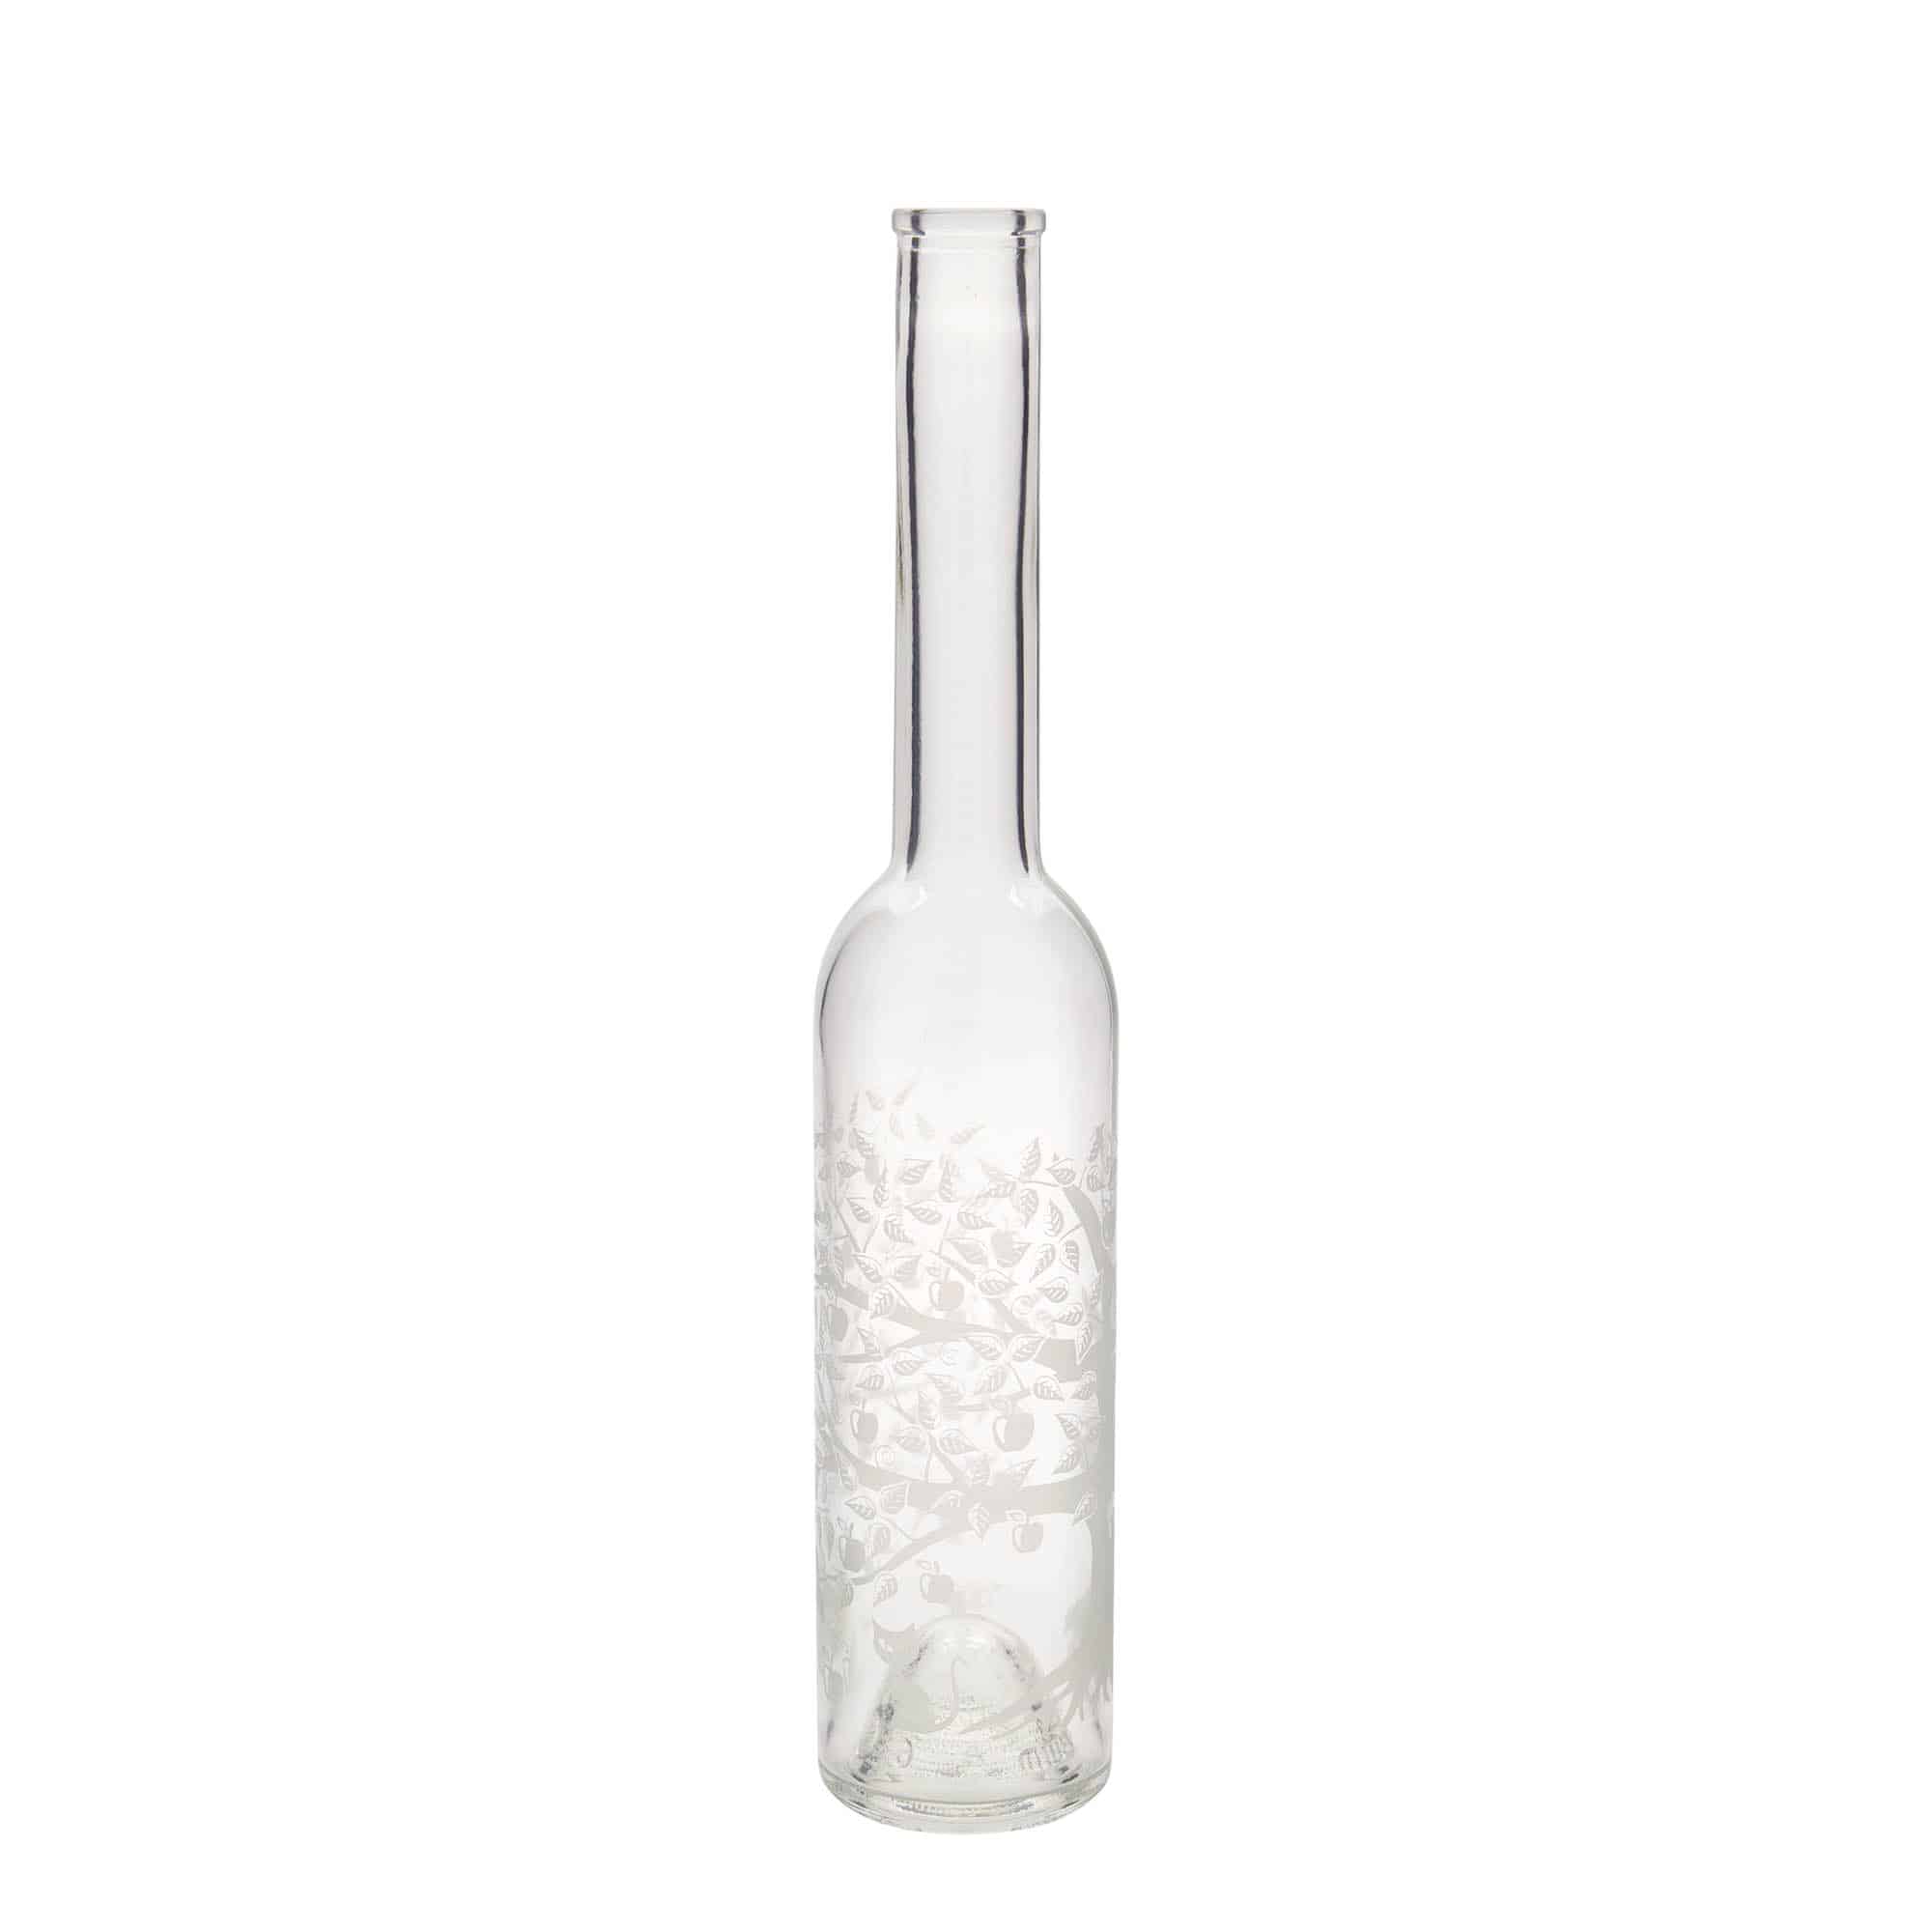 350 ml glass bottle 'Opera', print: apple tree, closure: cork